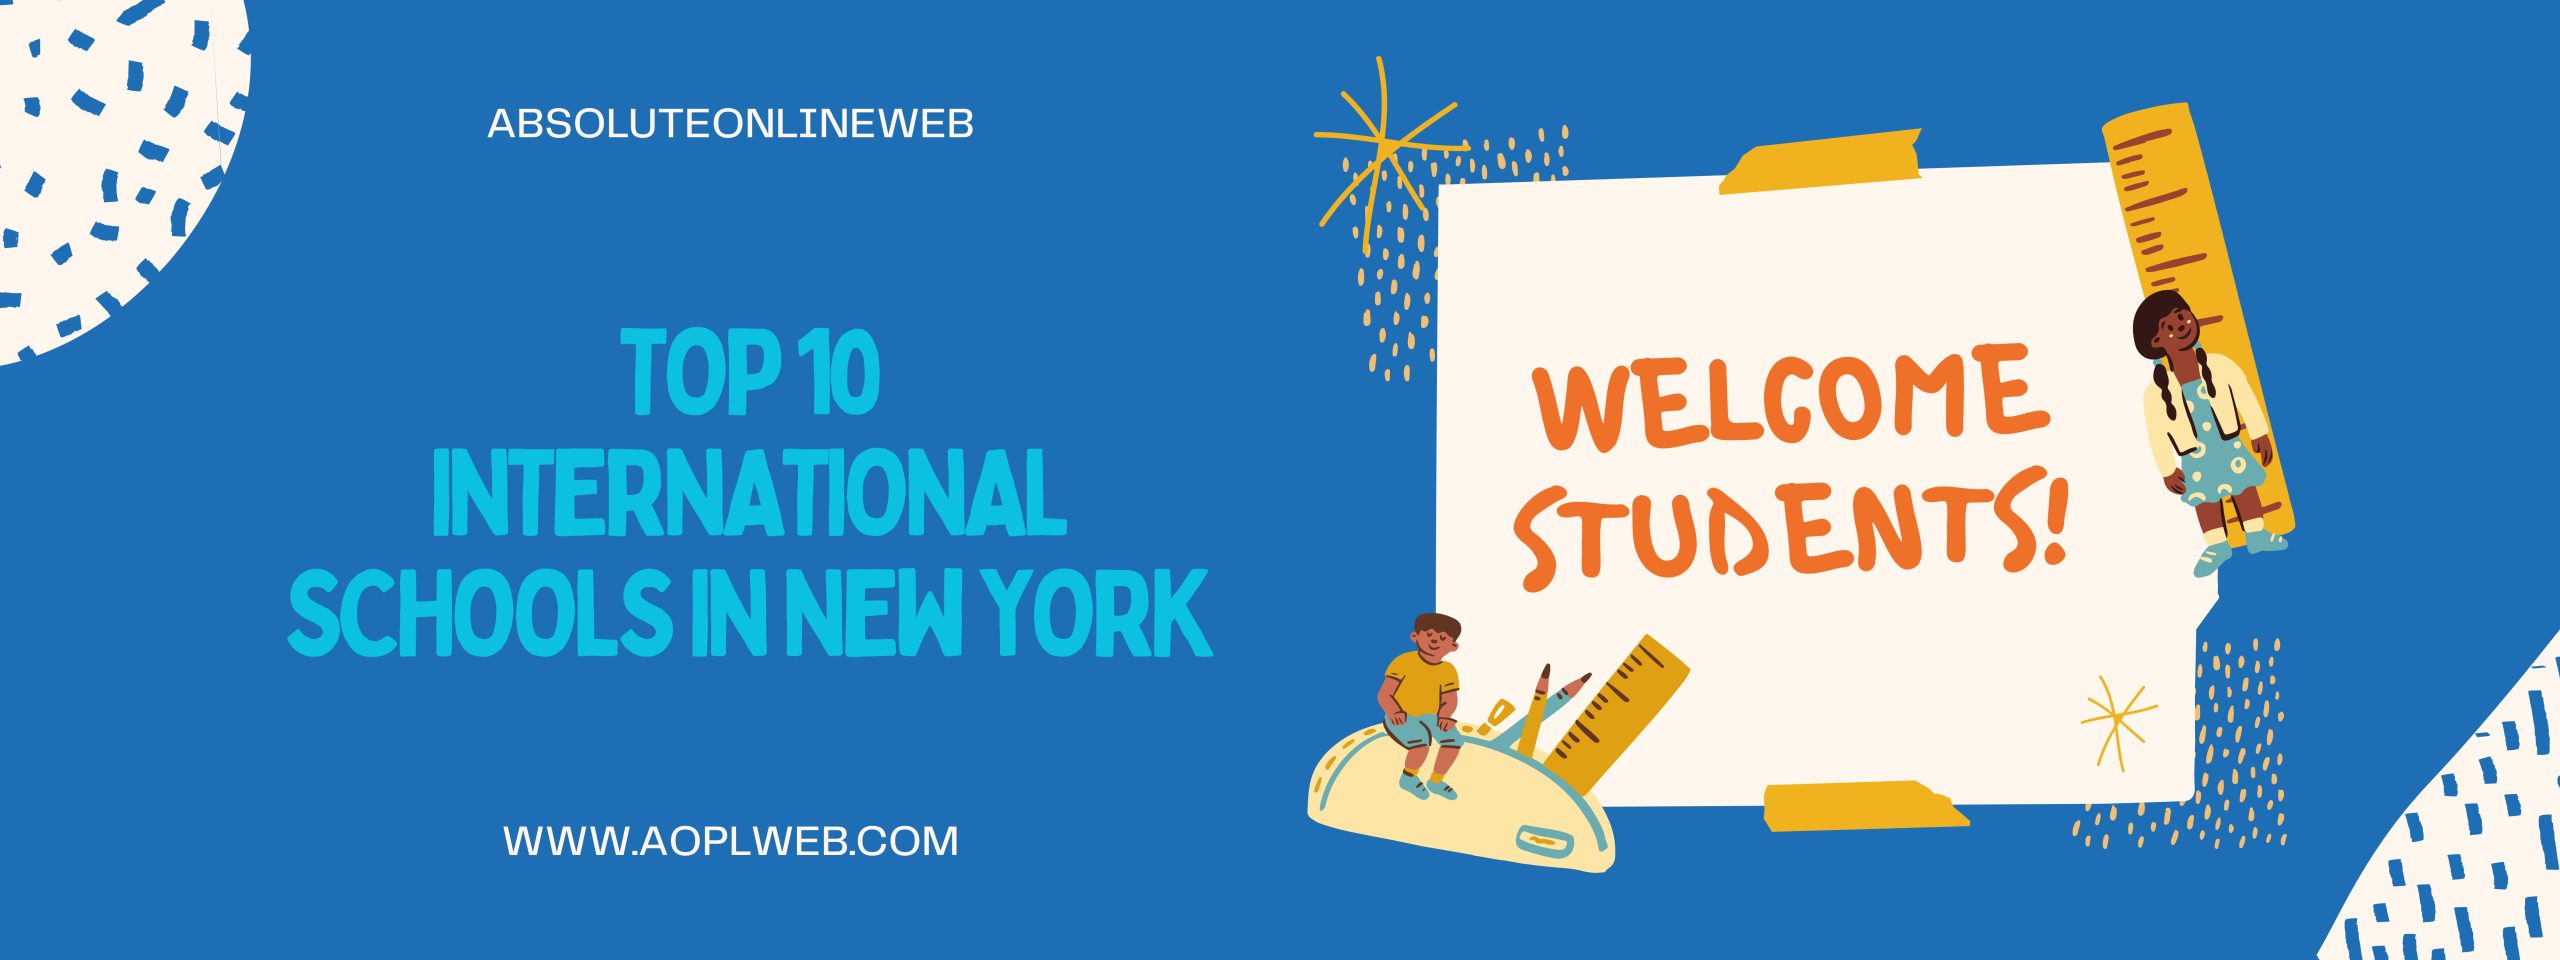 Top 10 International Schools In New York Scaled 